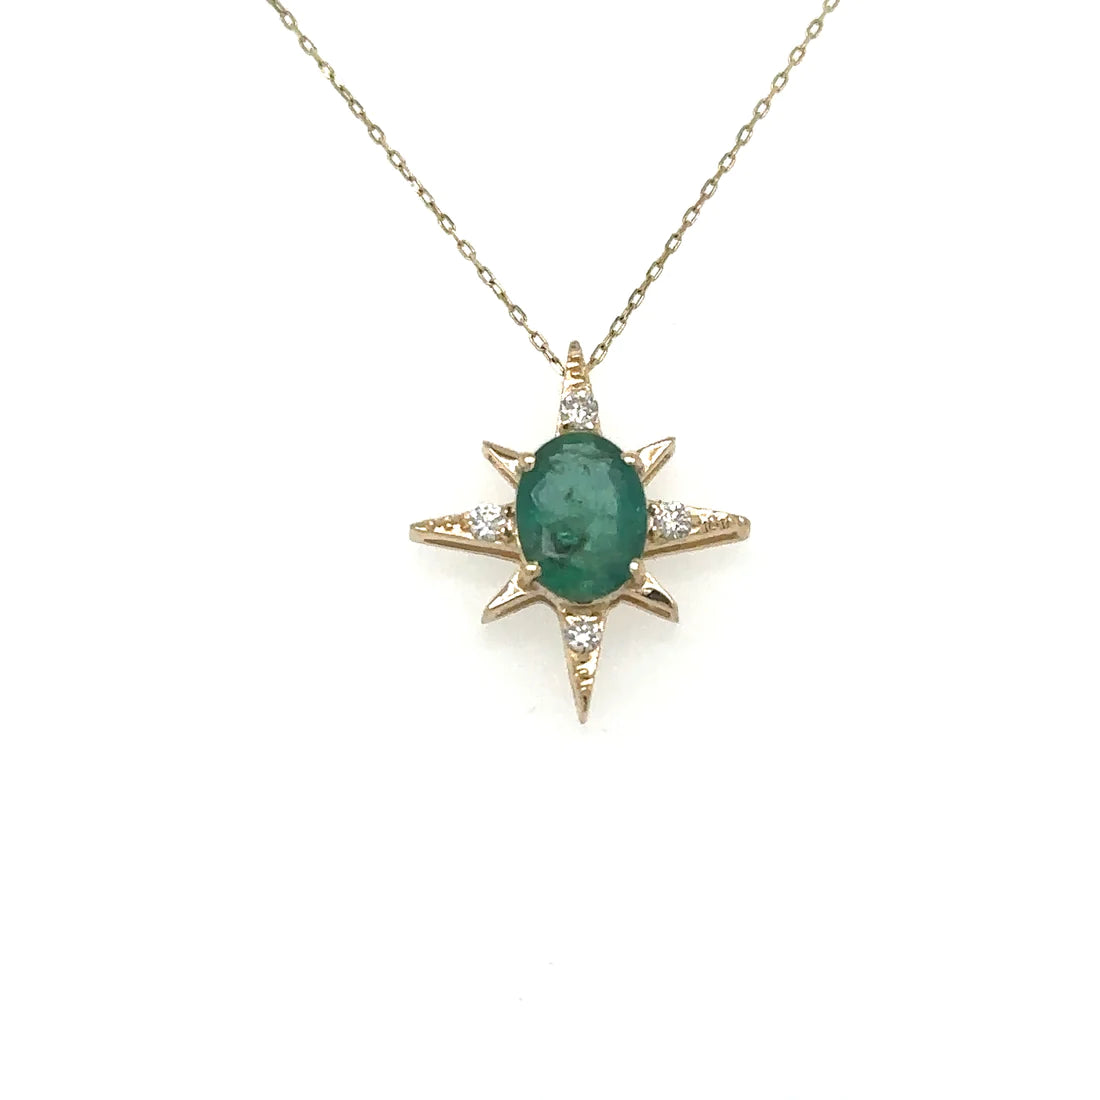 Starburst Pendant With Emerald and Diamonds